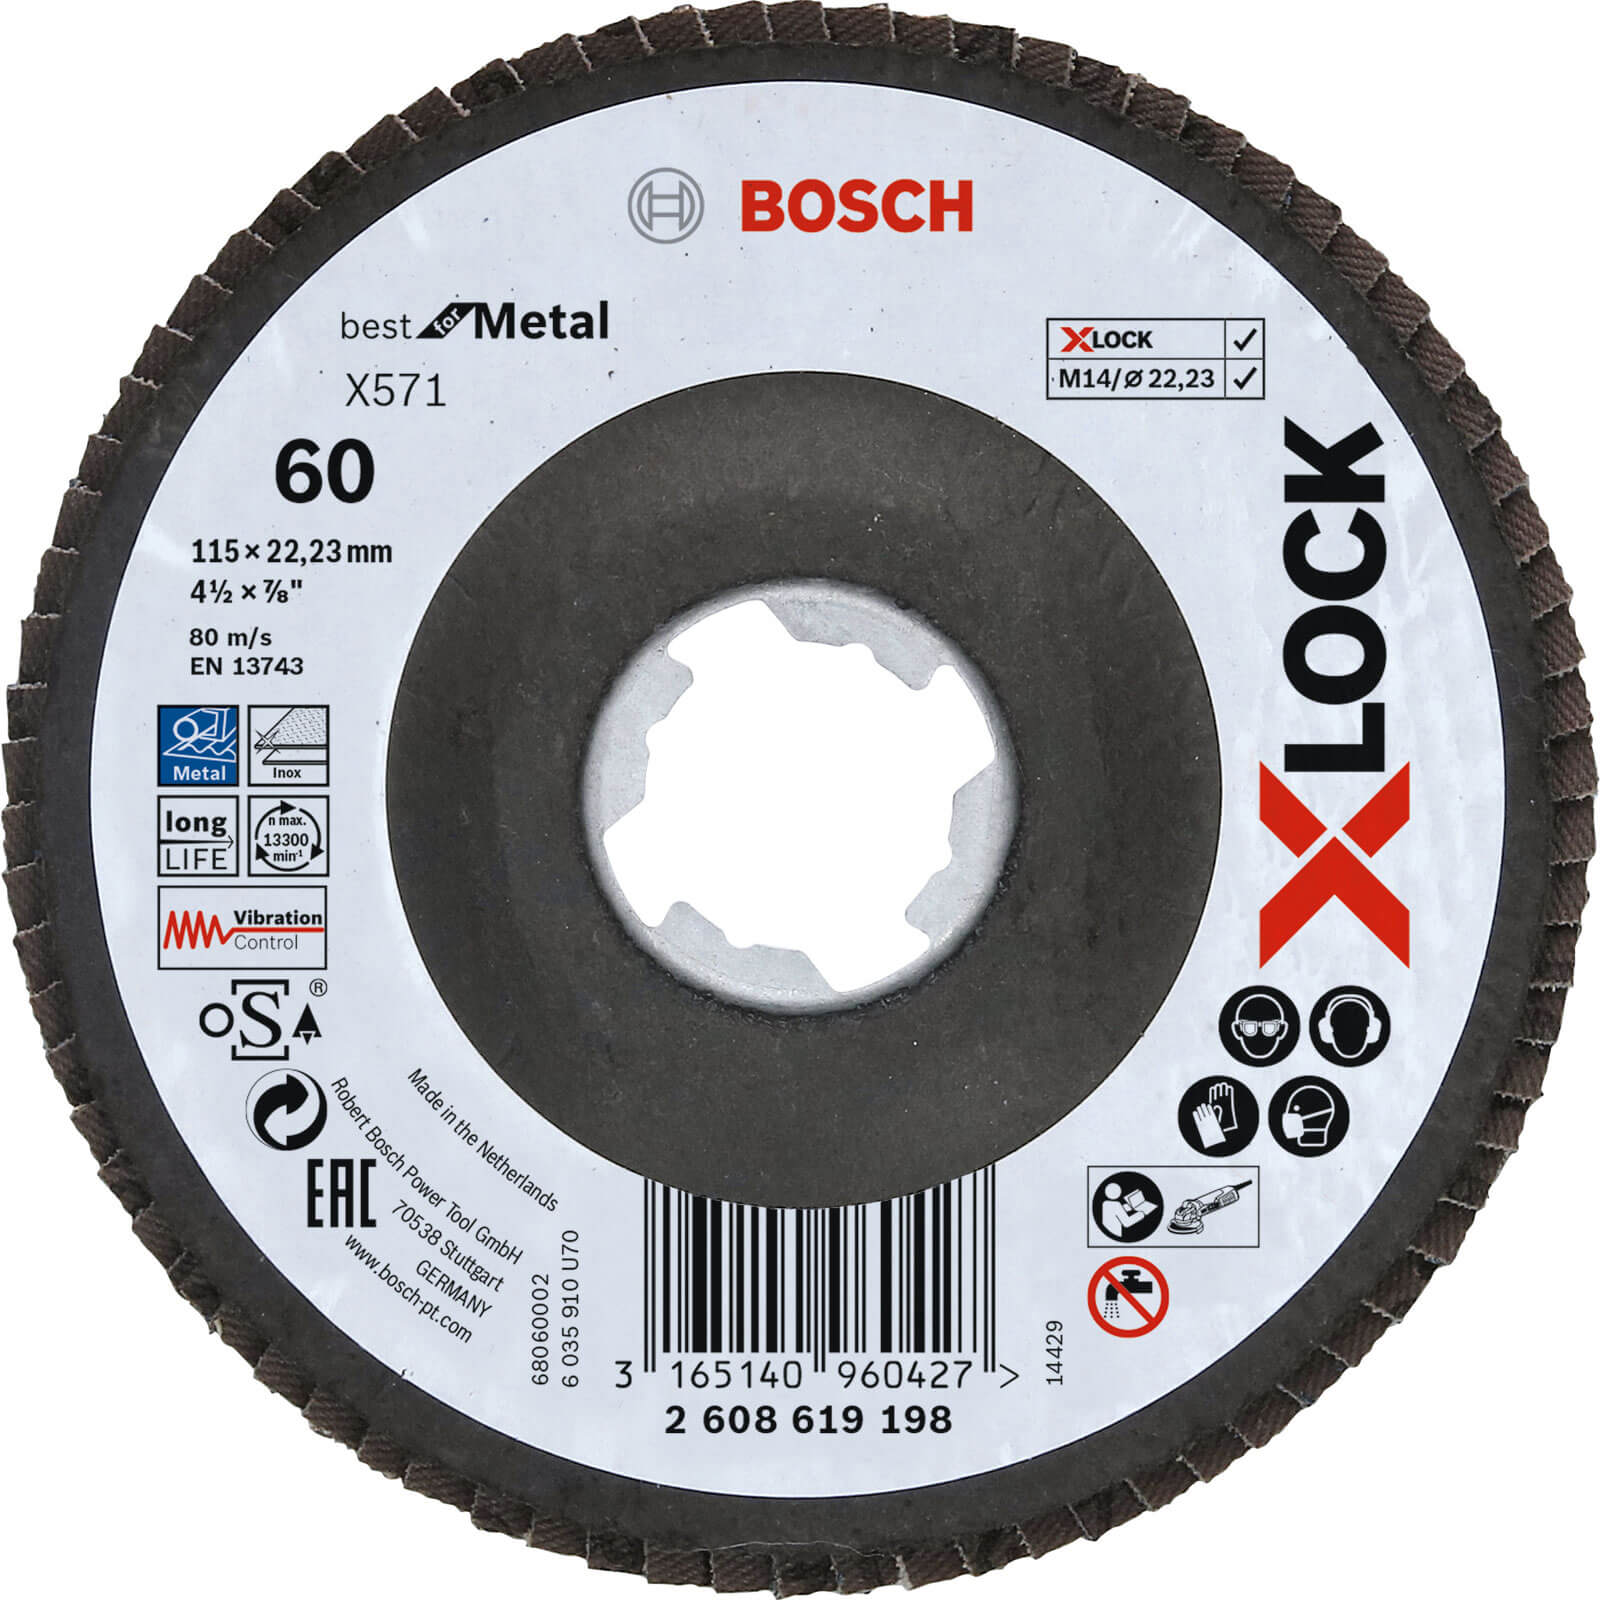 Photo of Bosch X Lock Zirconium Abrasive Flap Disc 115mm 60g Pack Of 1